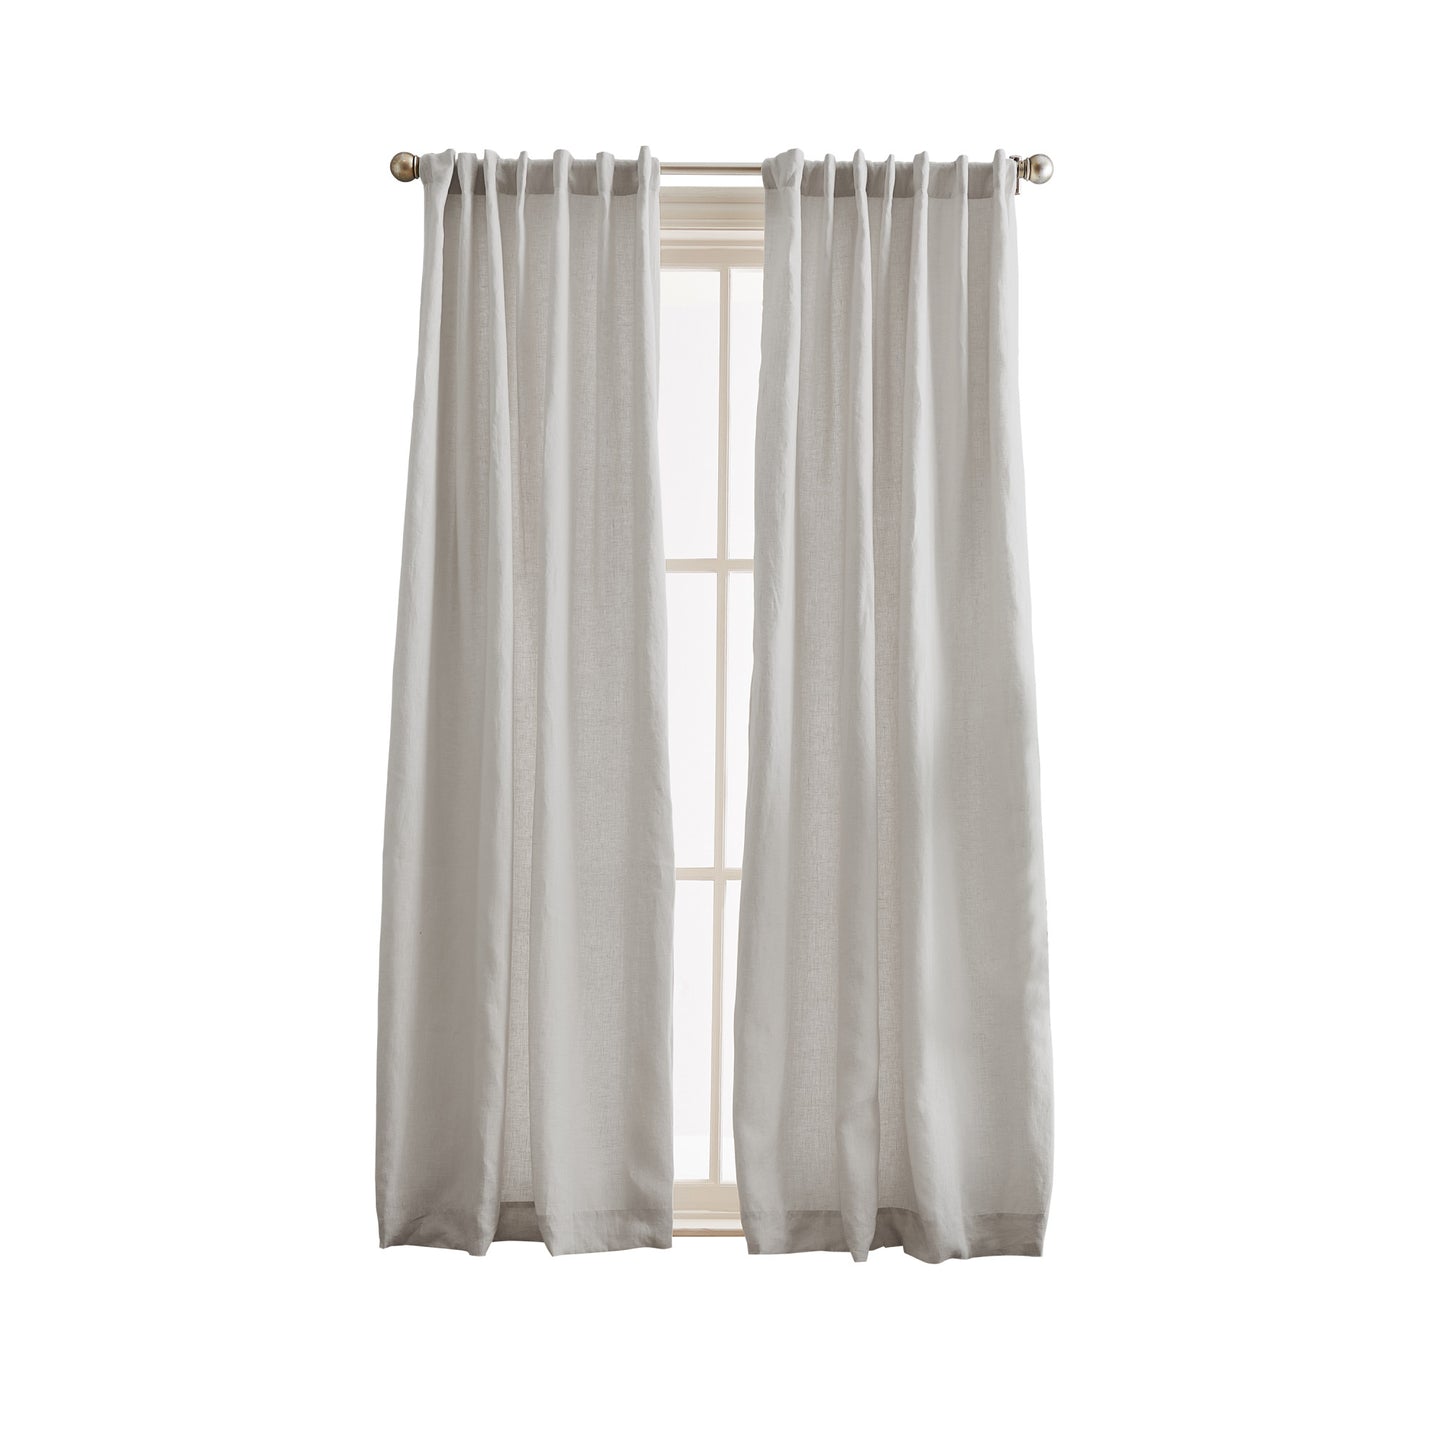 Peri Home 100% Linen Curtain Panel